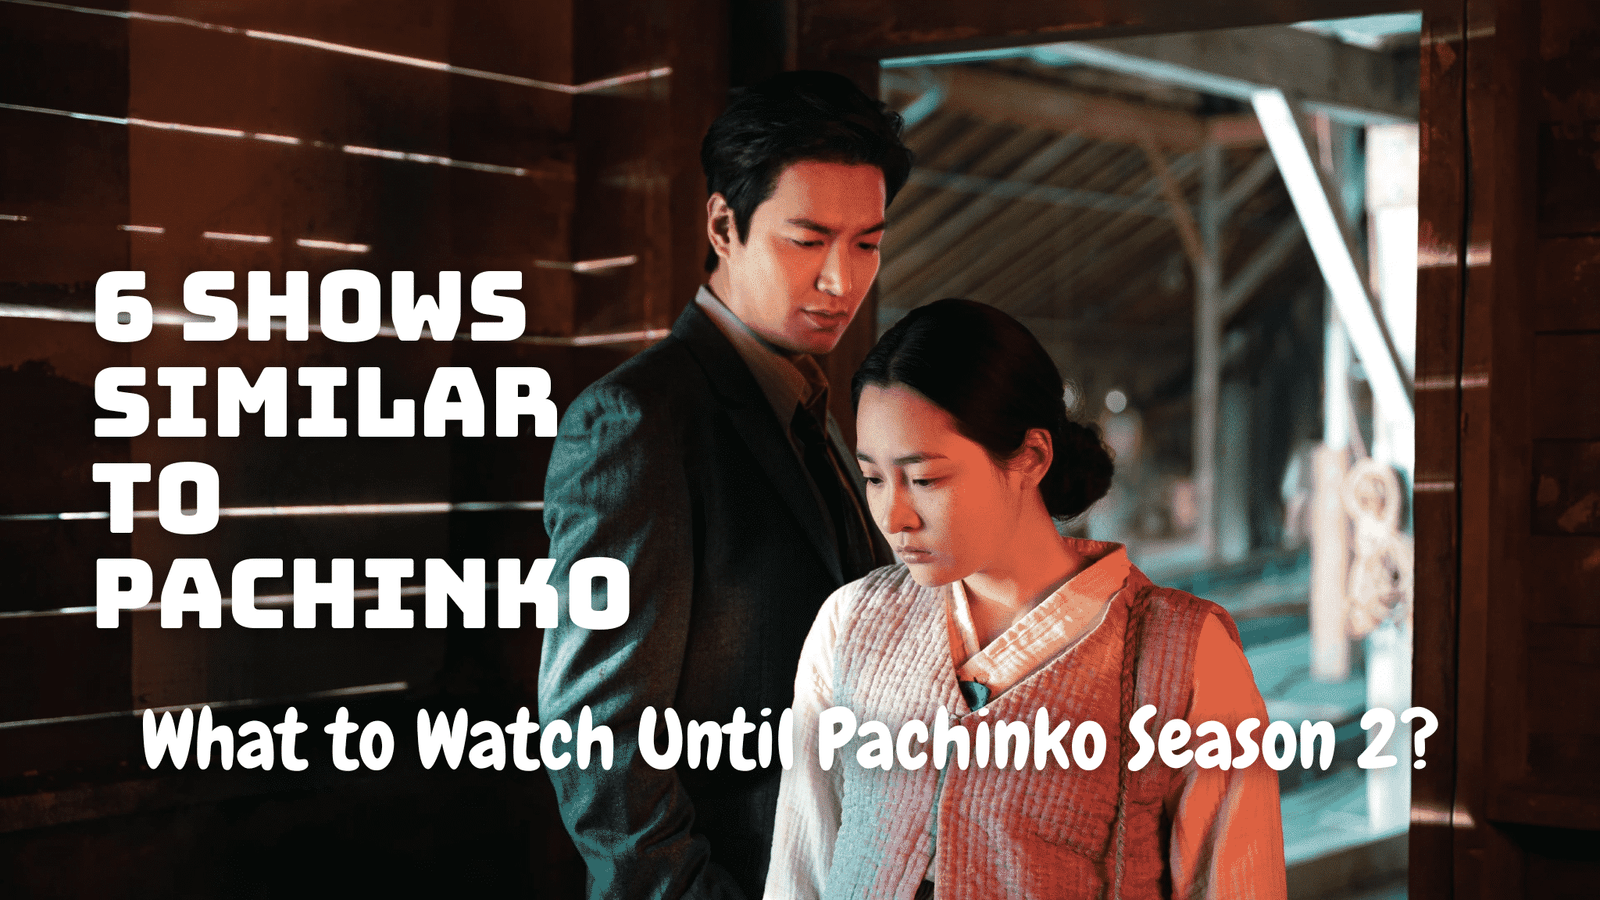 6 Shows Similar to Pachinko - What to Watch Until Pachinko Season 2?